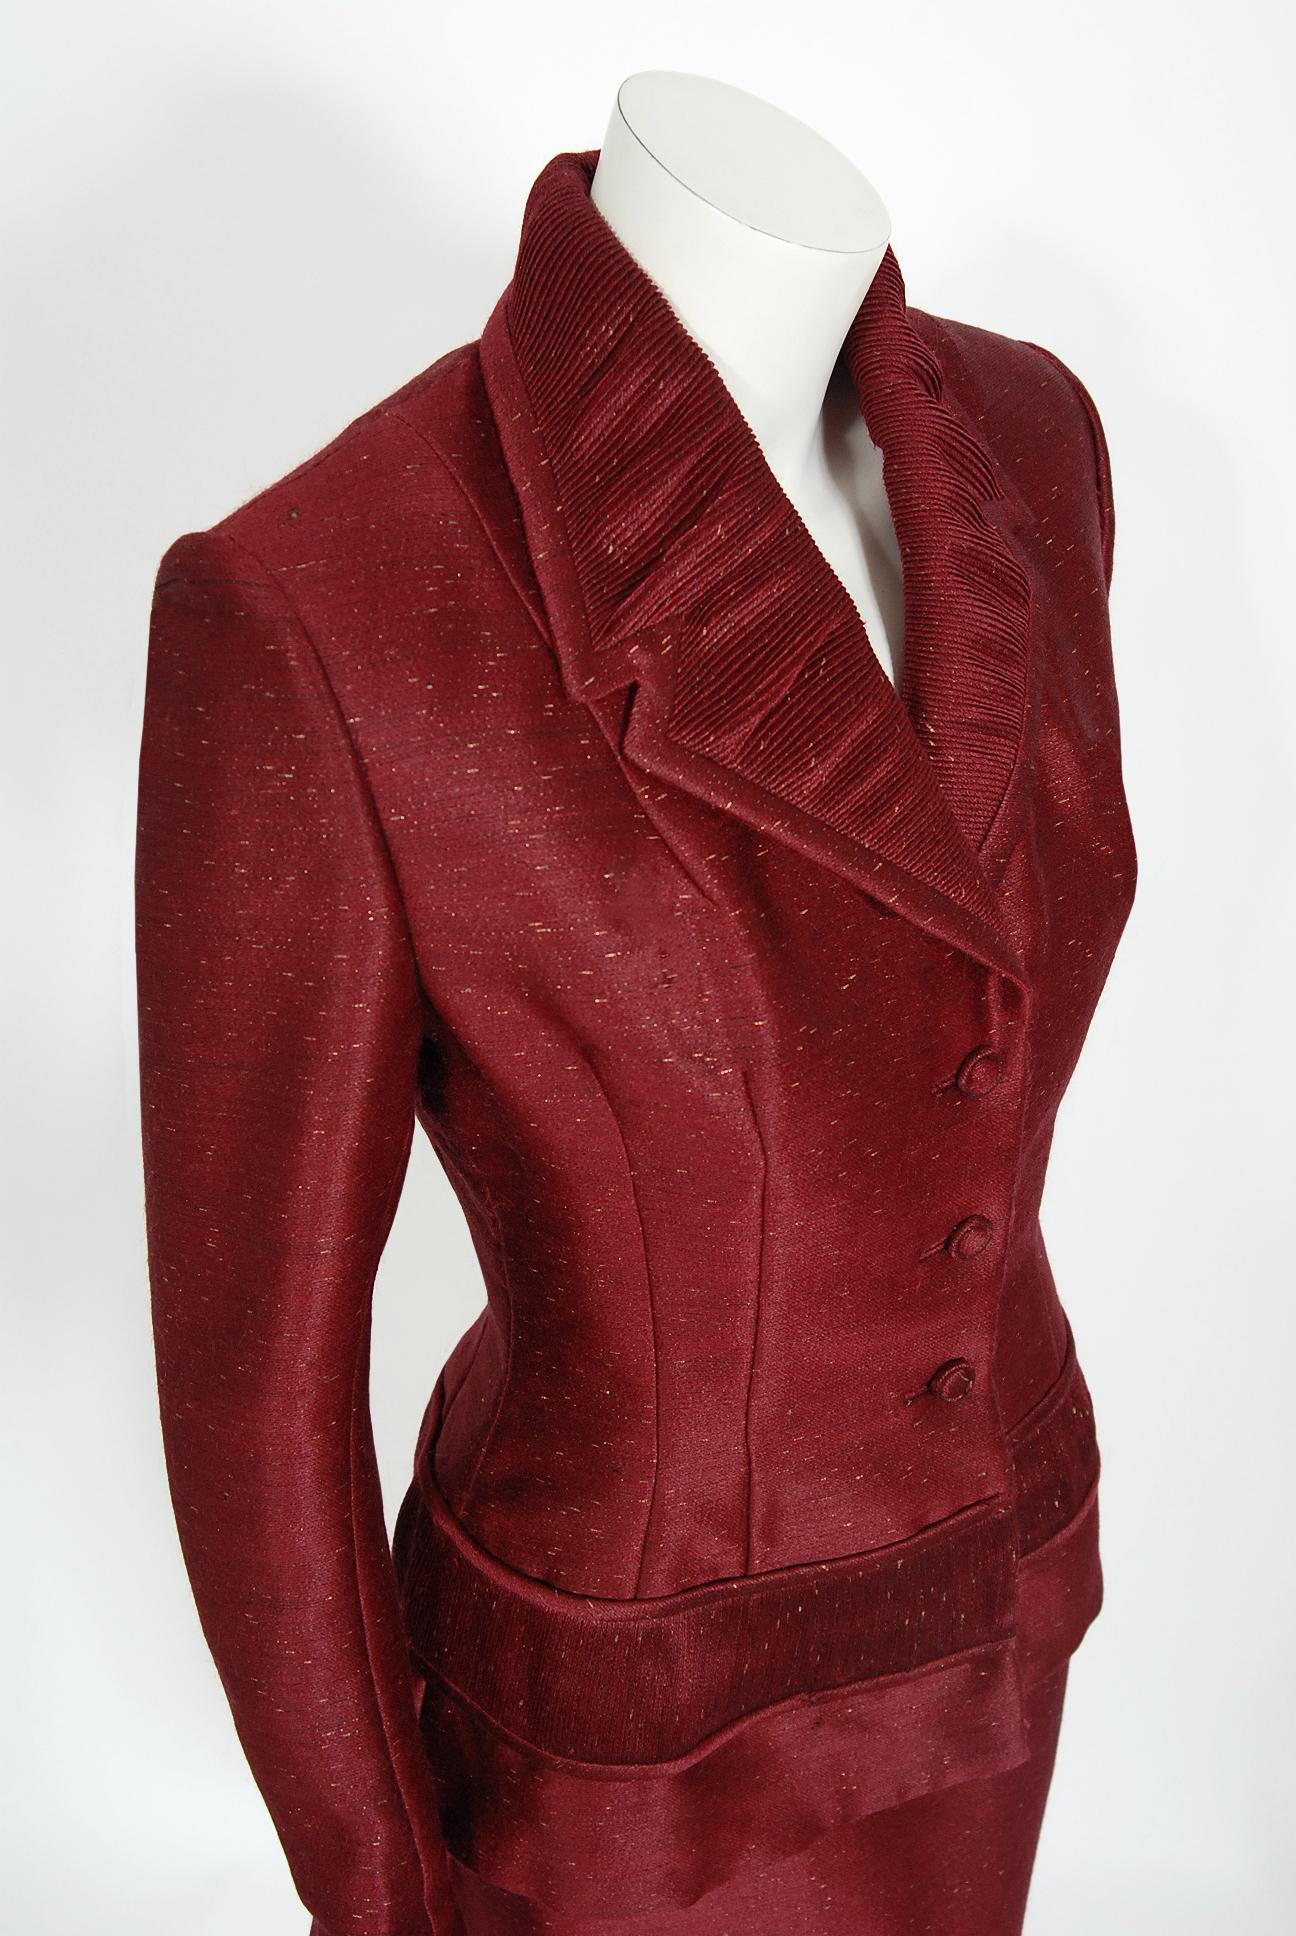 Vintage 1950's Lilli Ann Merlot Red Metallic Silk Pleated Jacket and Skirt  Suit